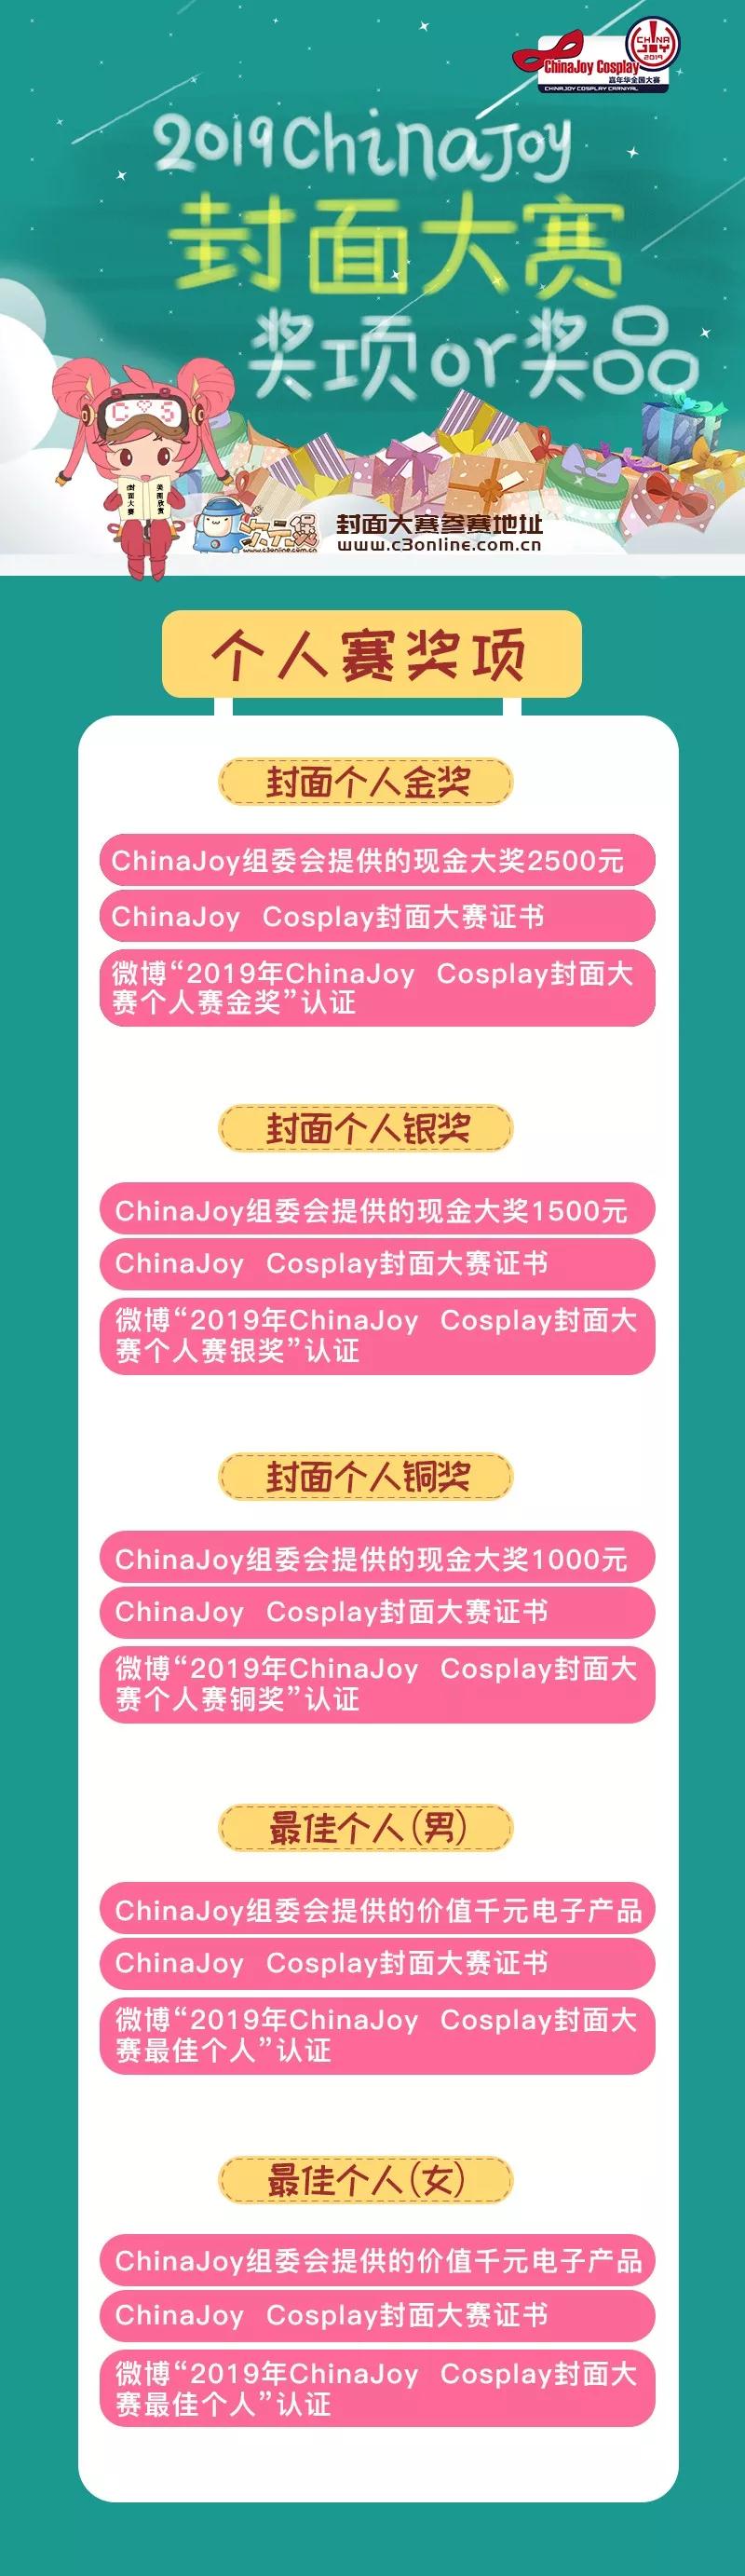 2019 ChinaJoy Cosplay封面大赛豪华奖品公布！